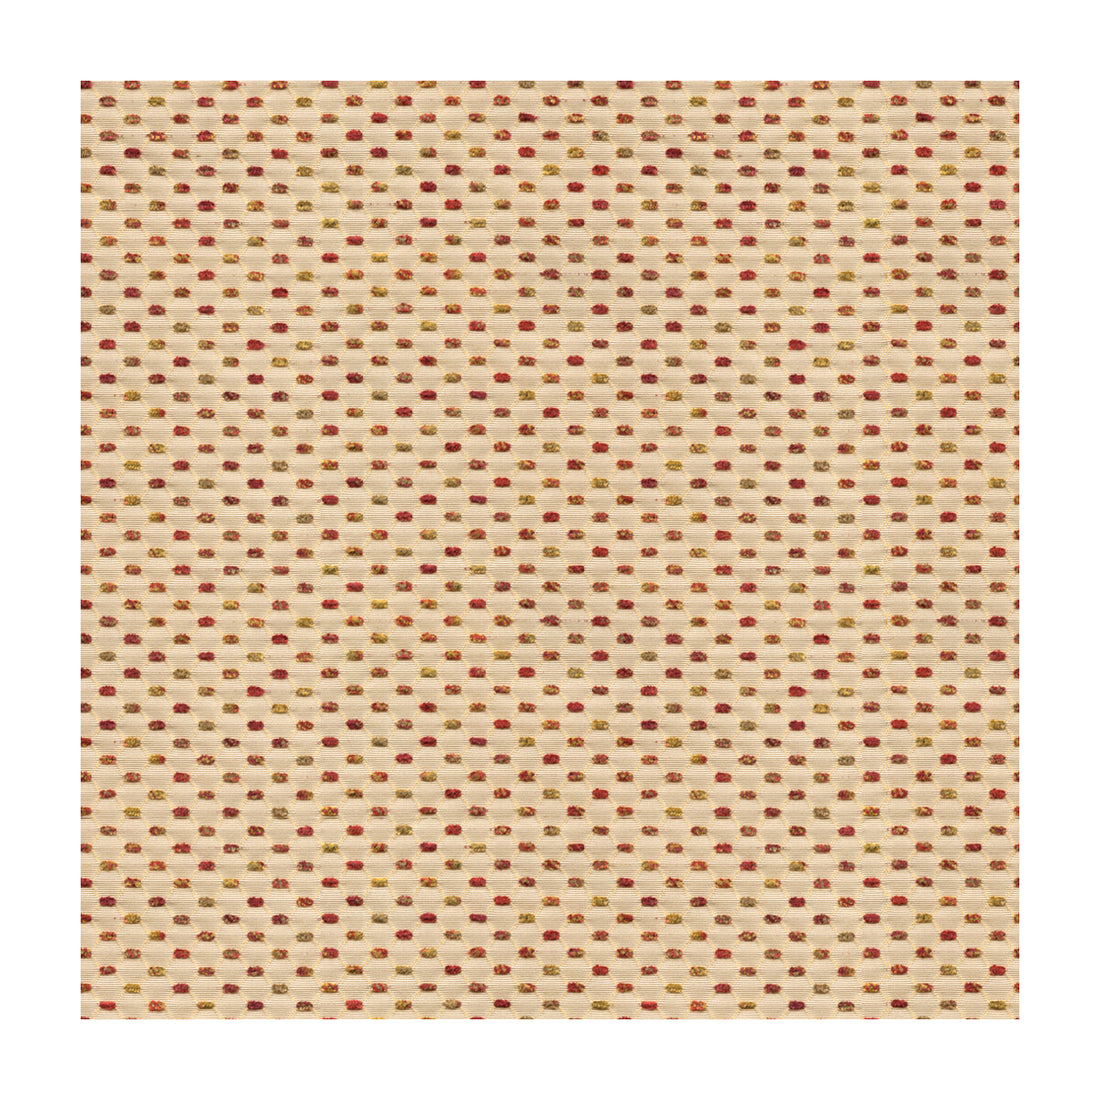 Kravet Smart fabric in 30631-1619 color - pattern 30631.1619.0 - by Kravet Smart